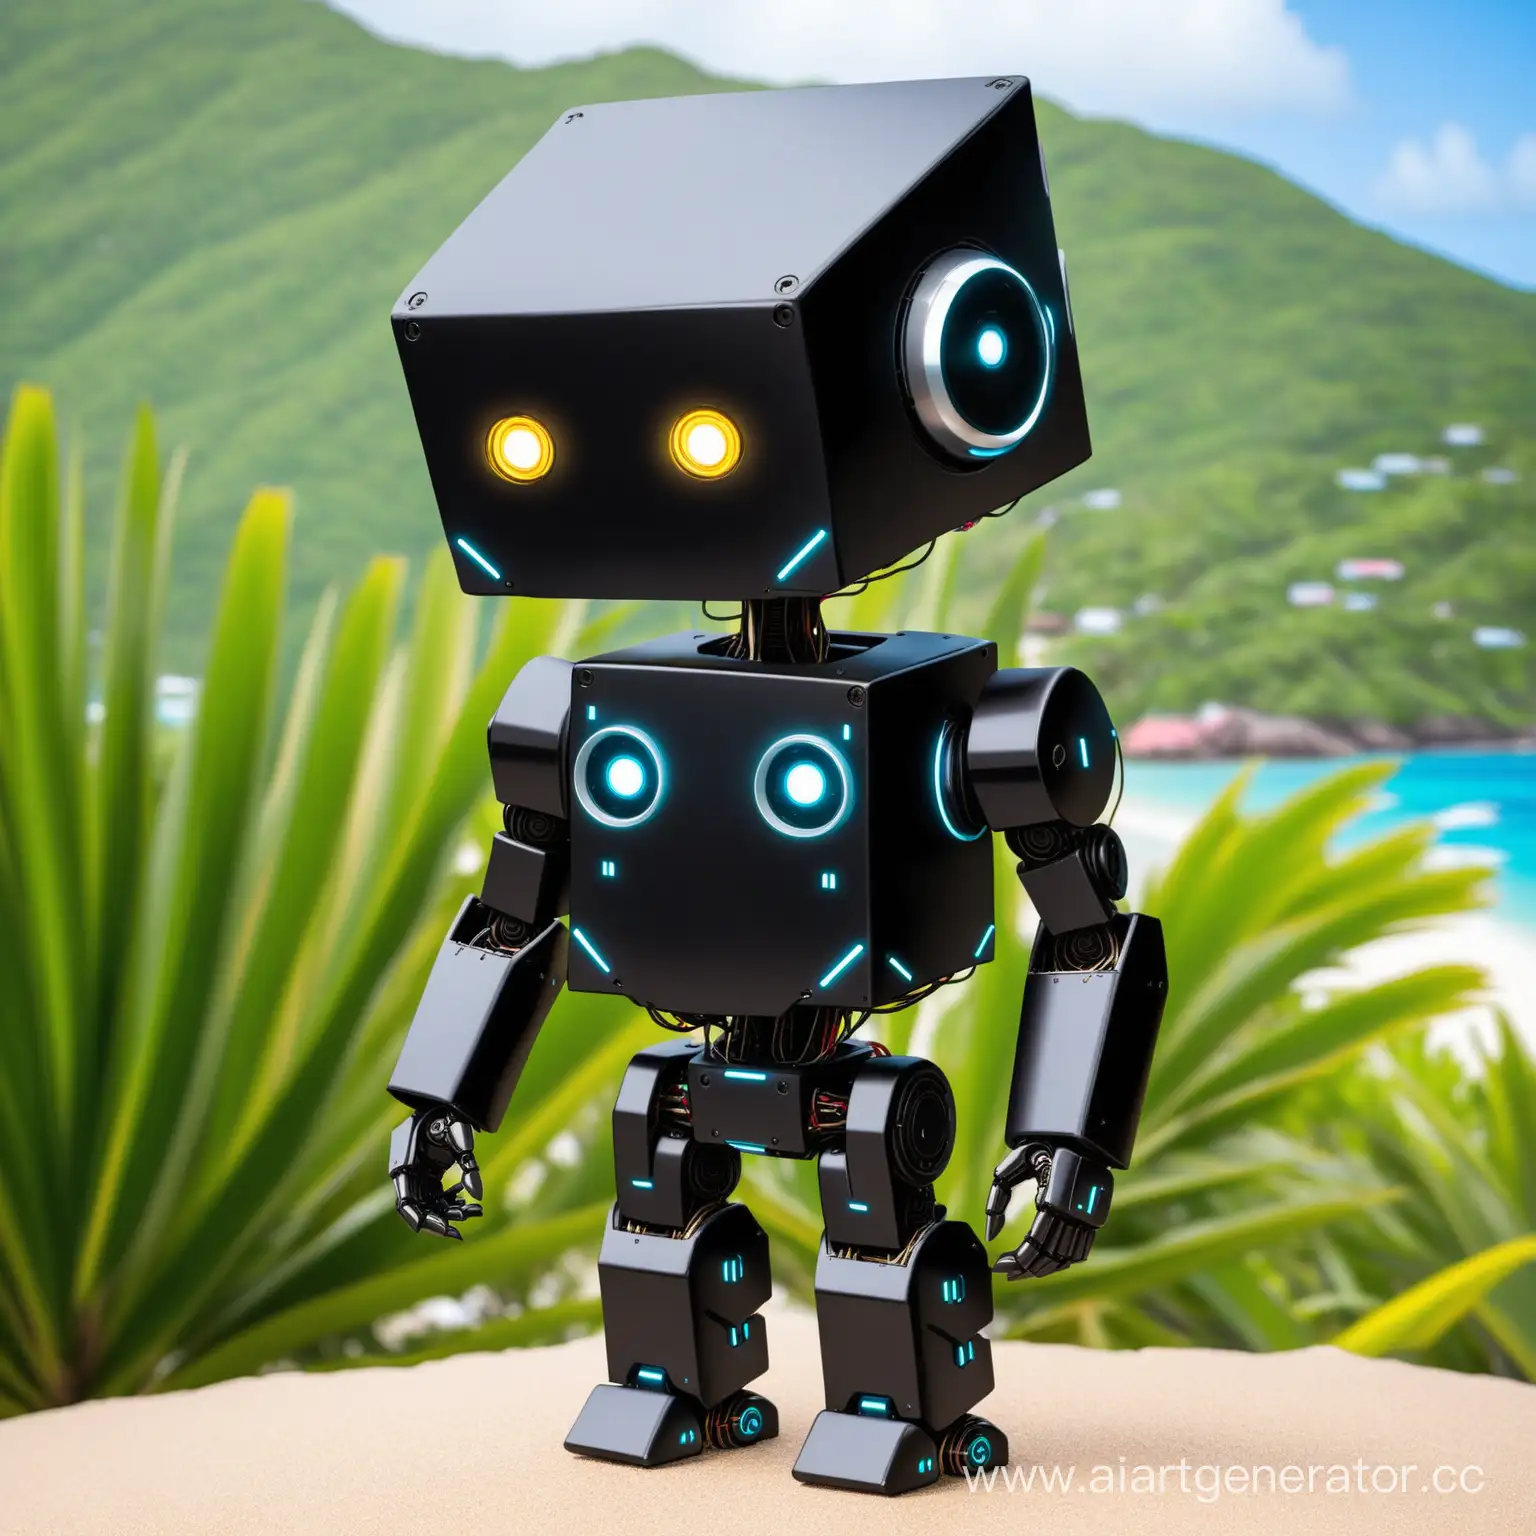 Adorable-Black-Robot-Cordelius-in-American-Virgin-Islands